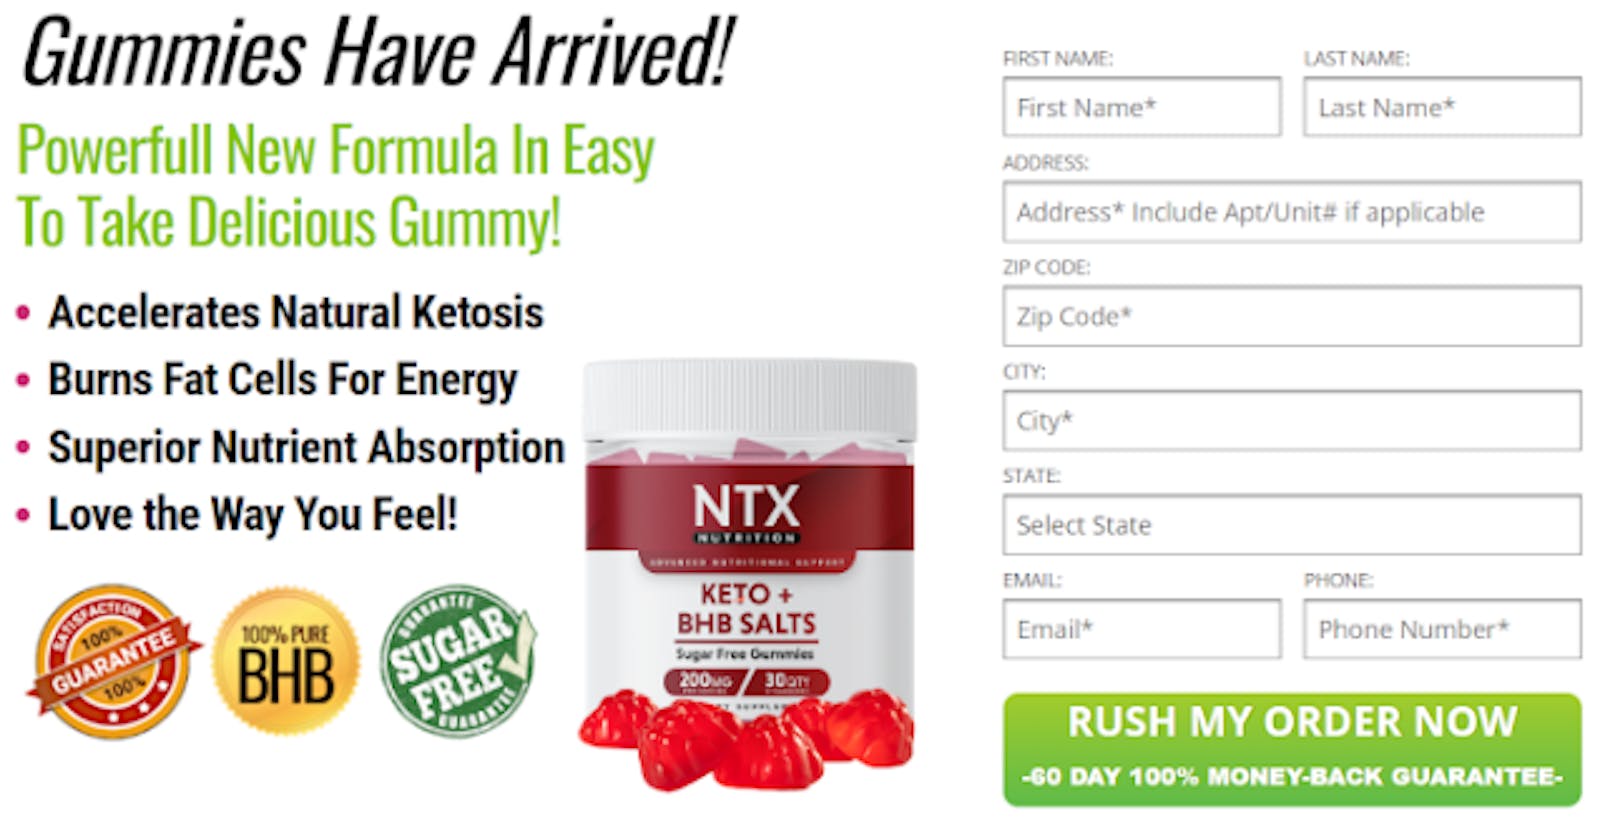 NTX Keto BHB Gummies #1 SharКTank Wеight Loss Pills - 90% Off Today Official Deal?